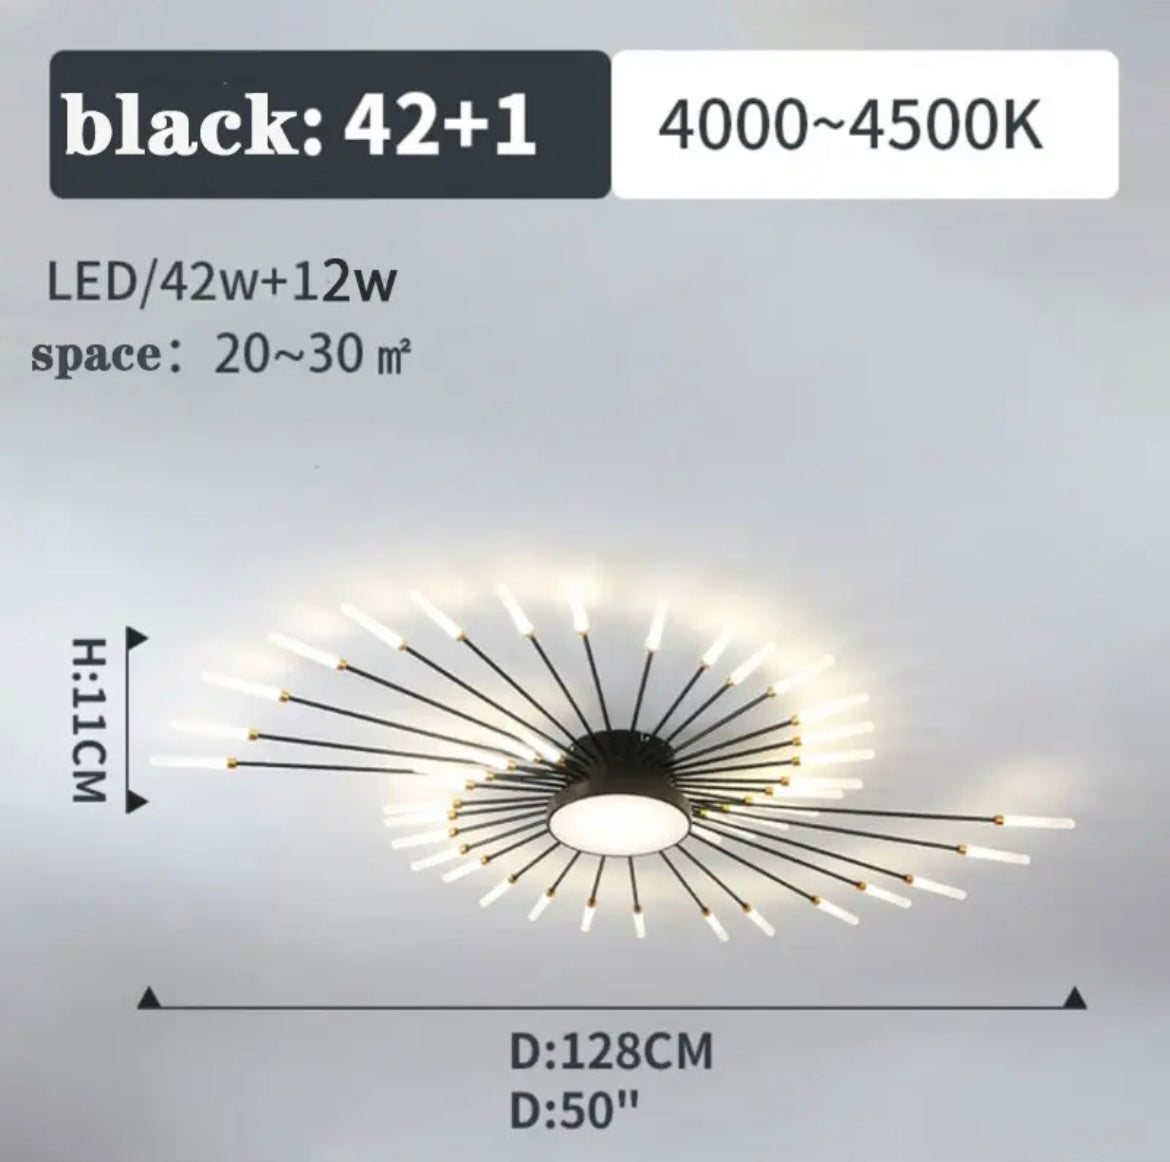 2-In-1 Firework Shaped LED Ceiling Light, with Center Light - b11house Black / 42+1 Heads